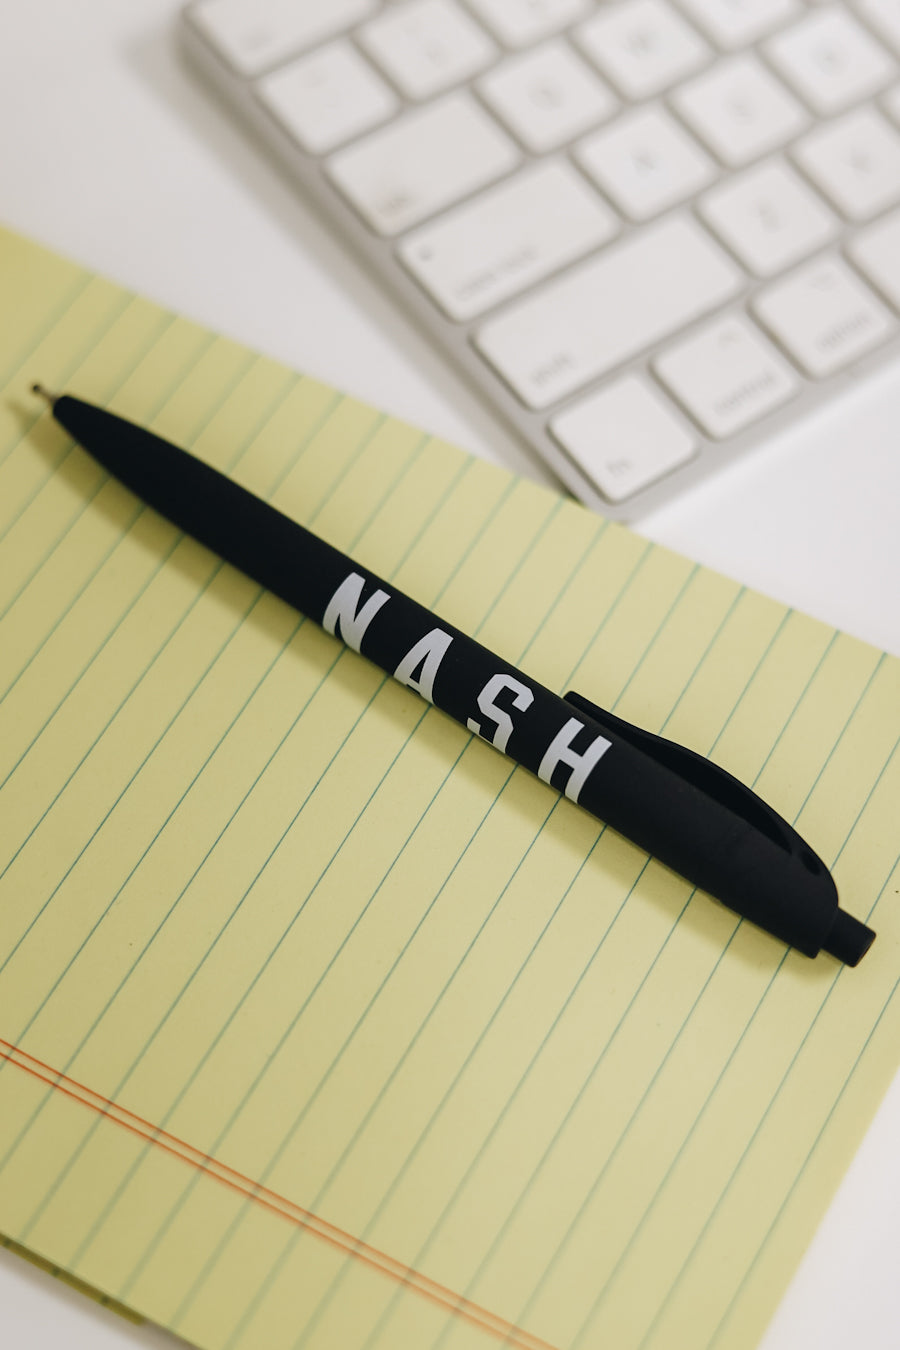 NASH Pen [Black]